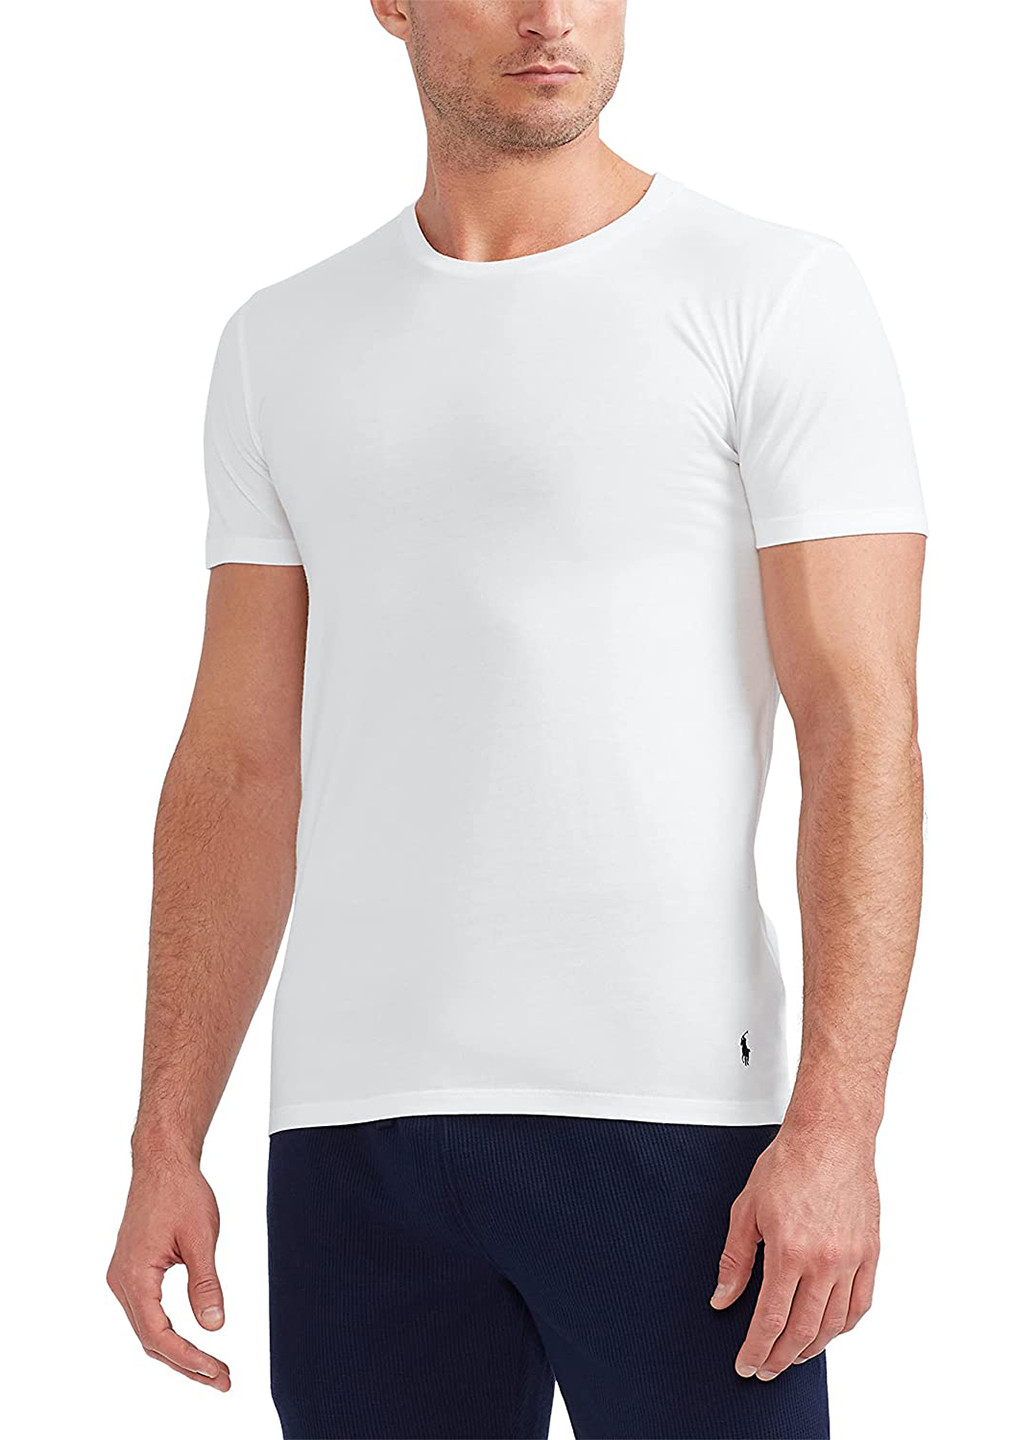 Белая футболка (3 шт.) с коротким рукавом Ralph Lauren